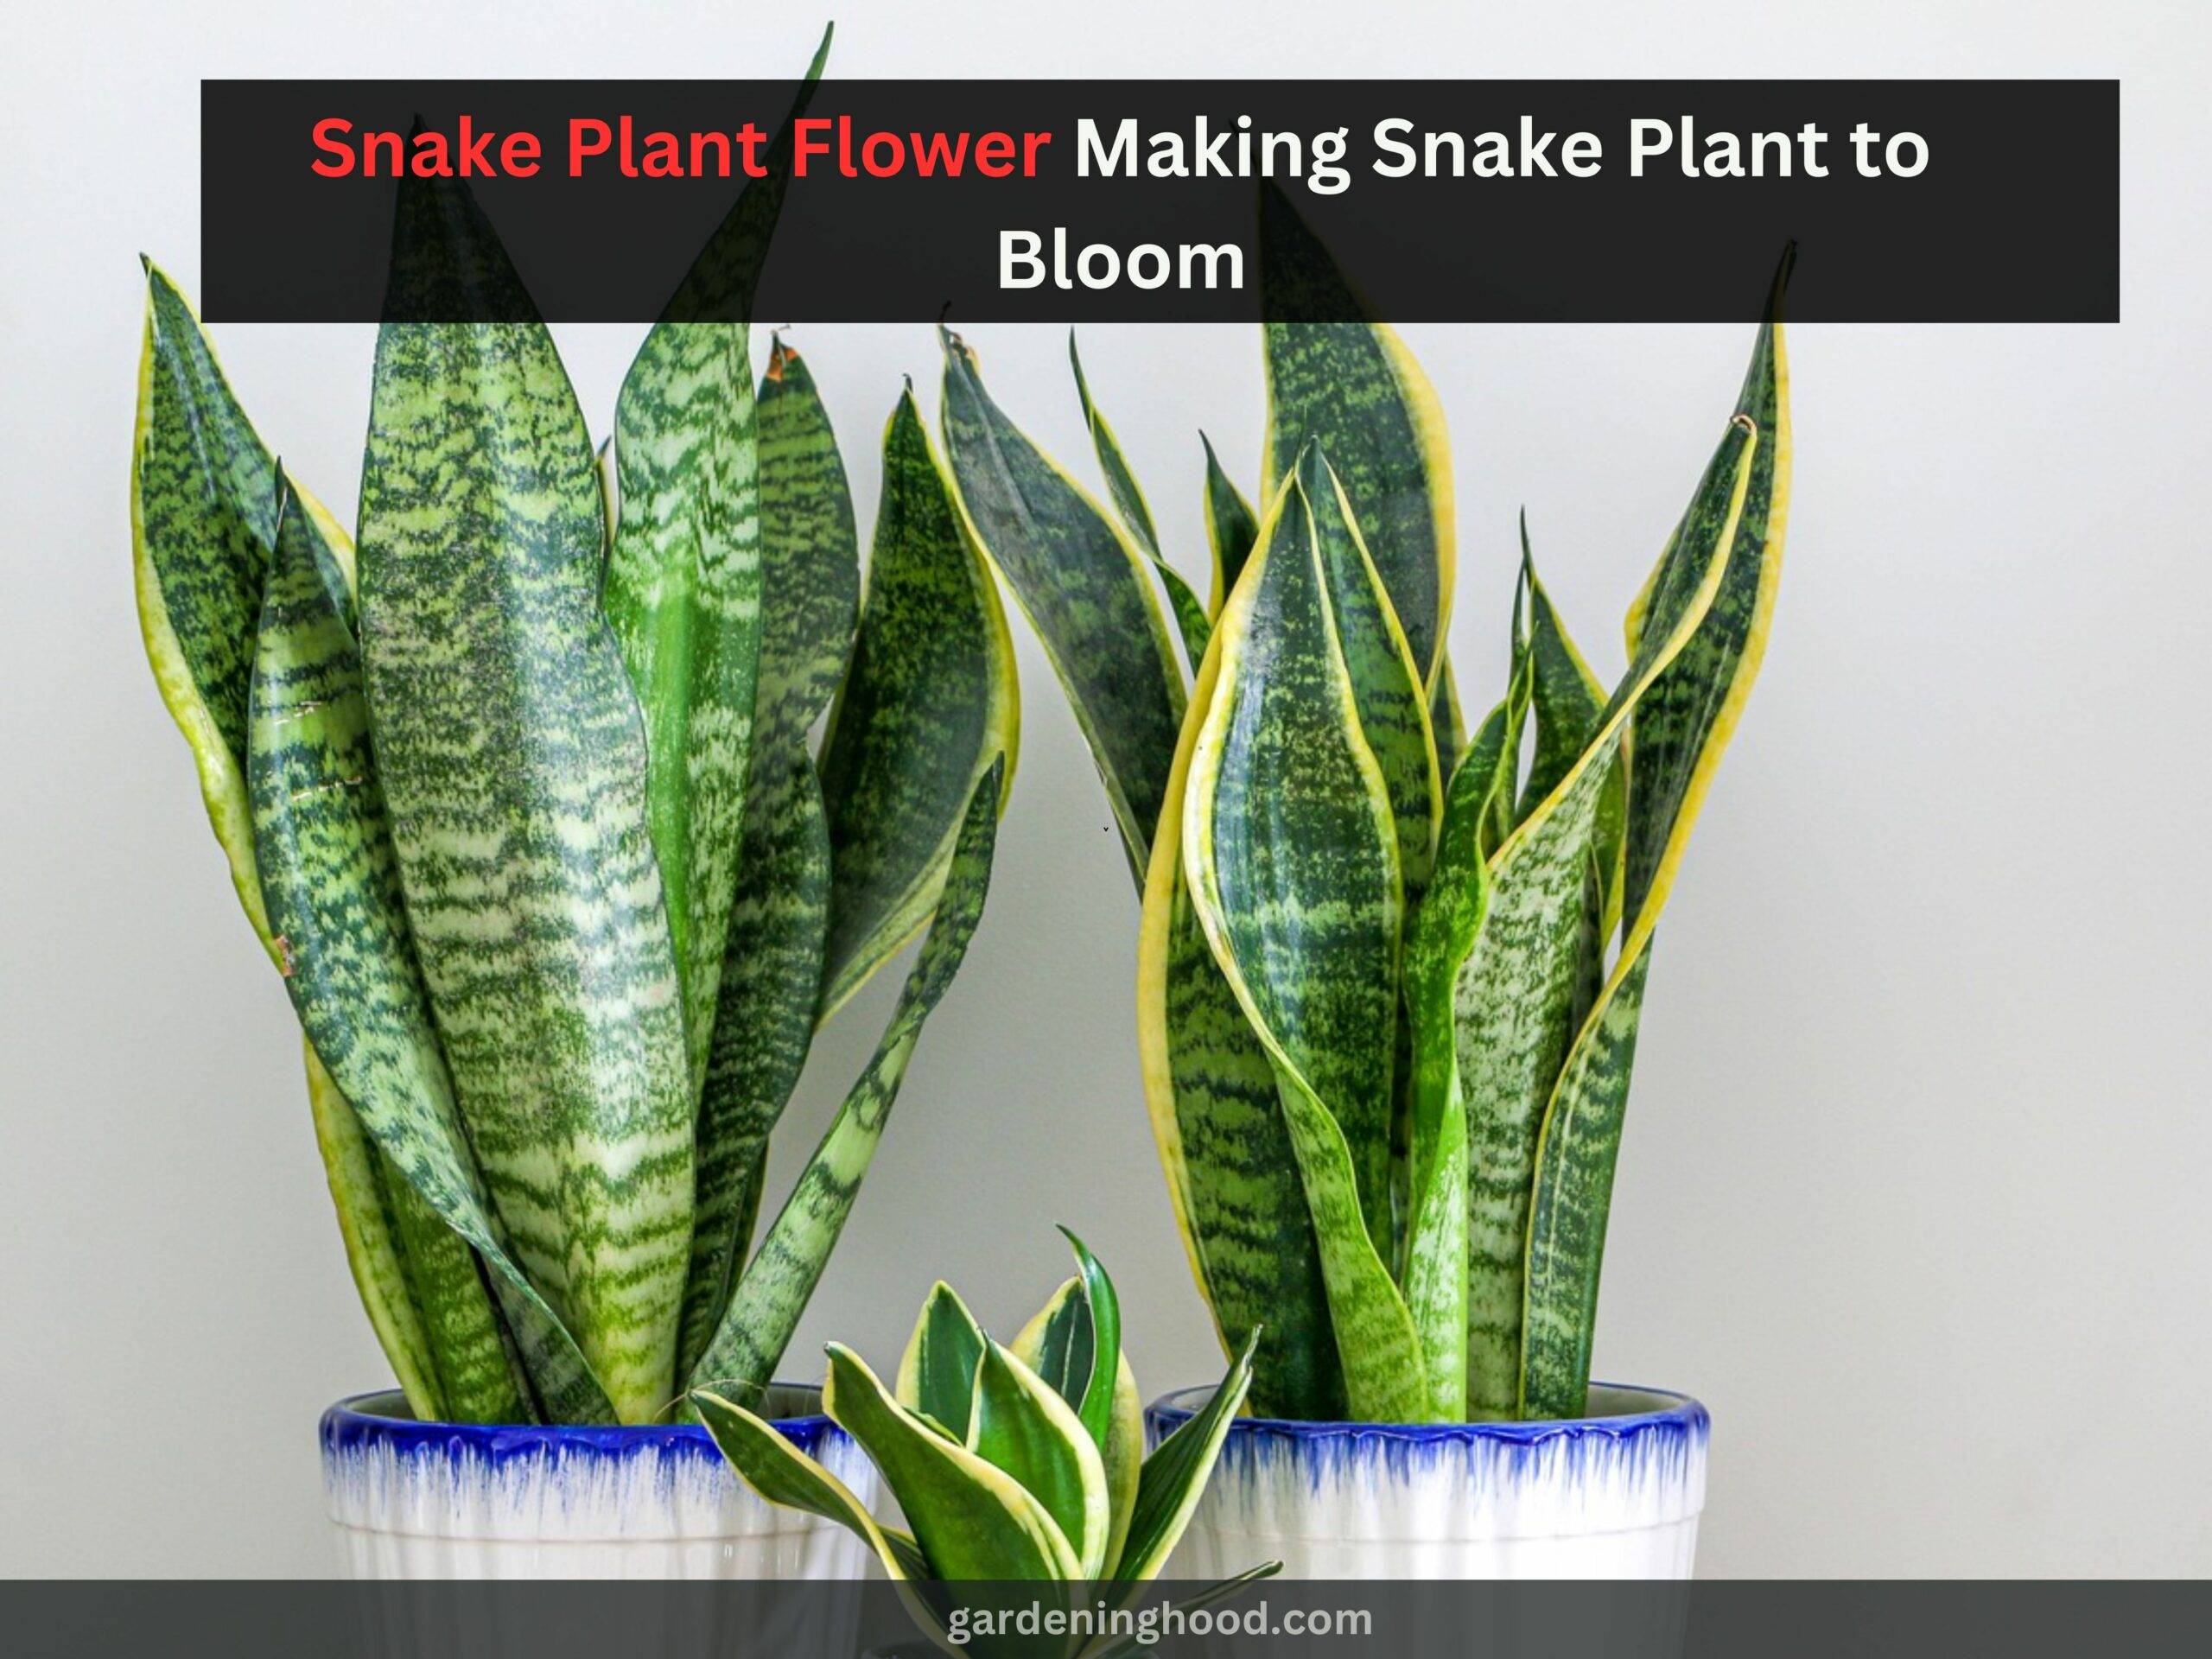 Snake Plant Flower: Making Snake Plant to Bloom